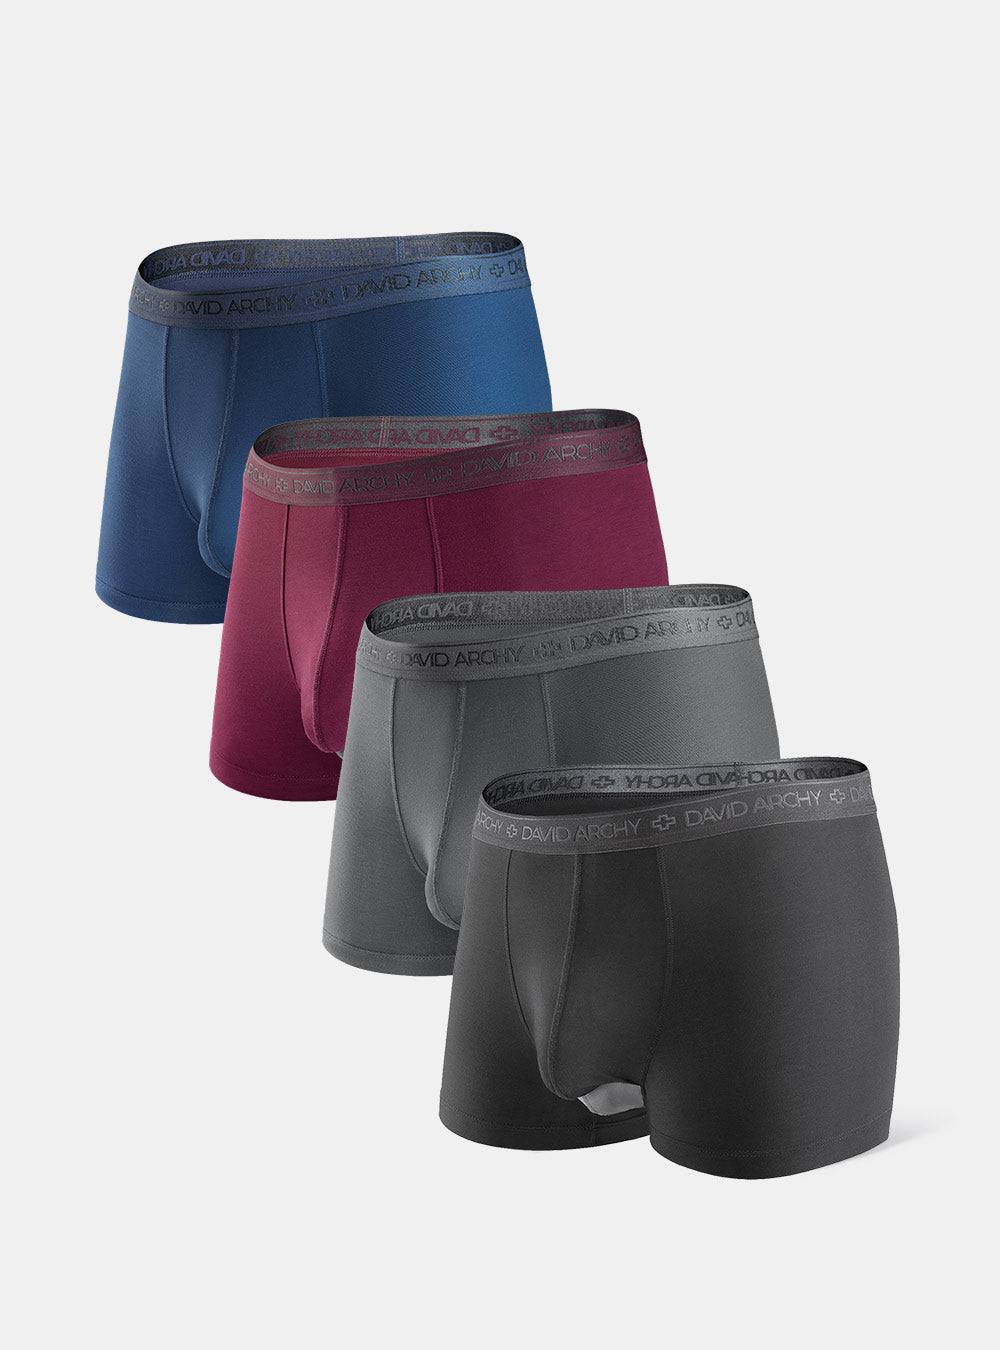 Mens Modal Cotton Long Cock Sheath Boxers Briefs/Trunks Underwear M/L/XL/XXL